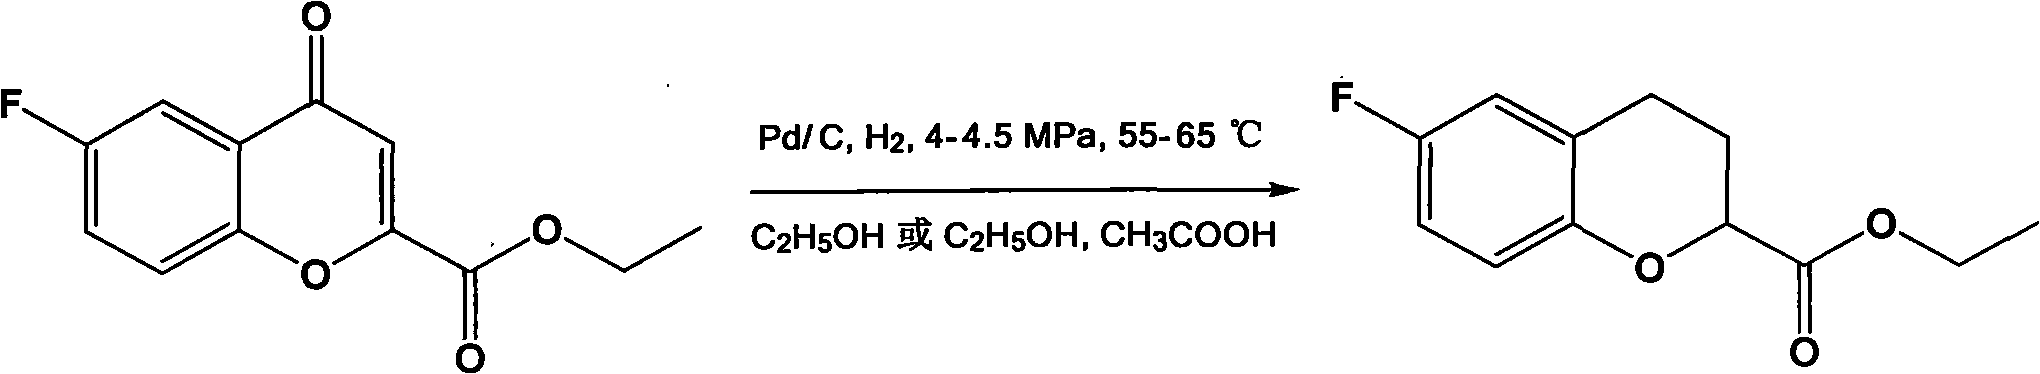 Preparation method for 6-fluorine-3,4-dihydro-2H-1-benzopyran-2-ethyl formate